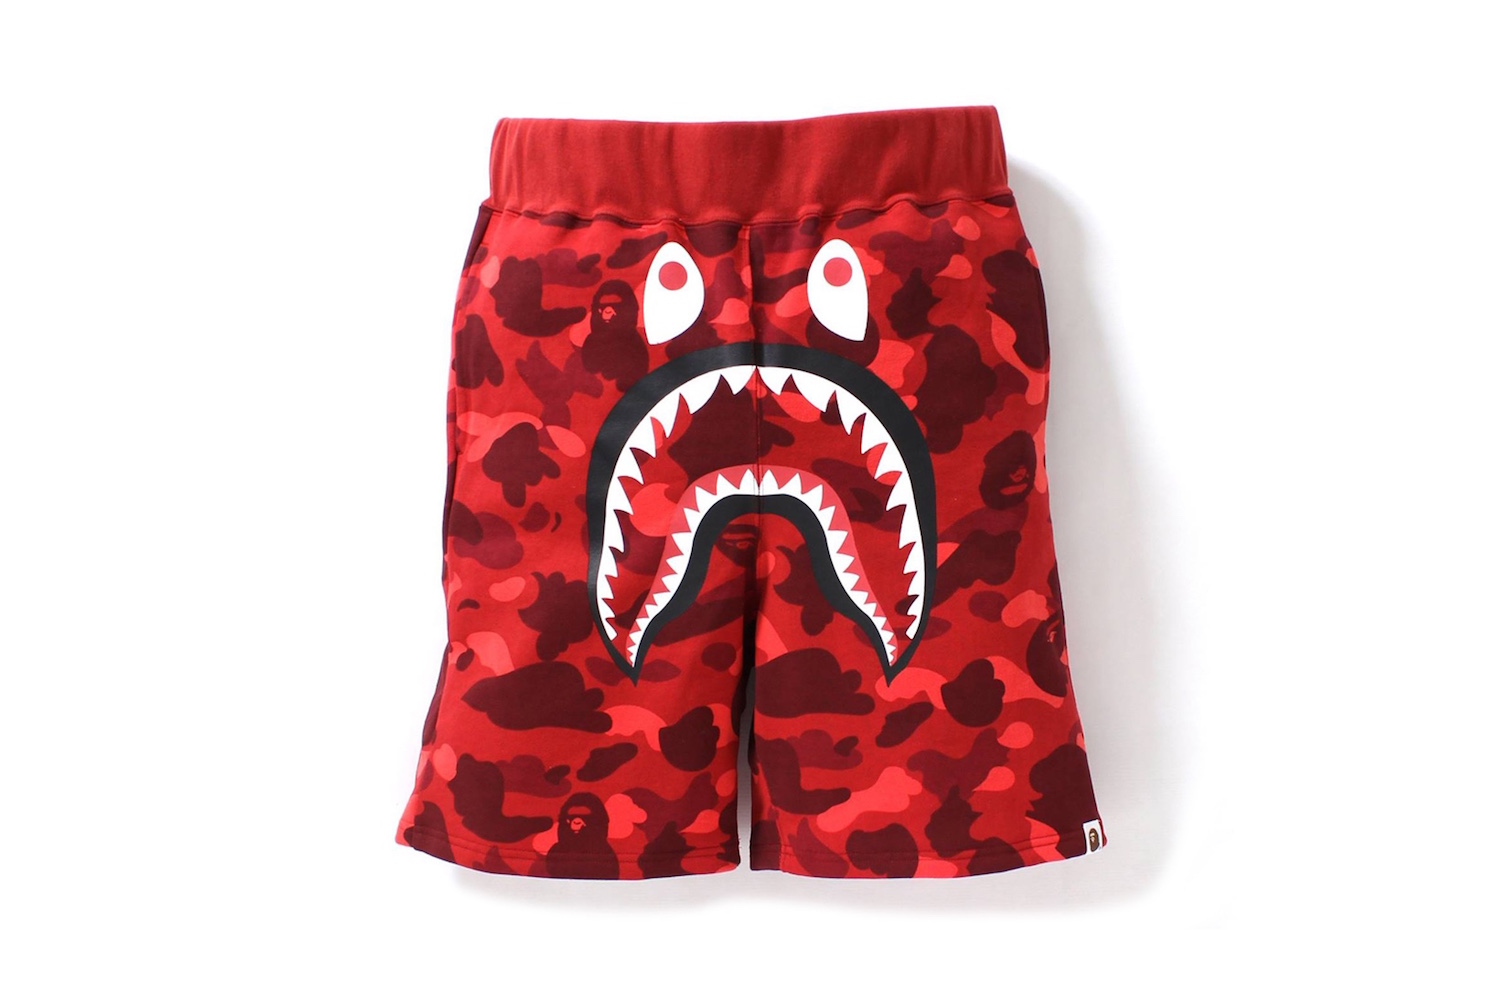 BAPE Announce “1st Camo Shark” Summer Shorts